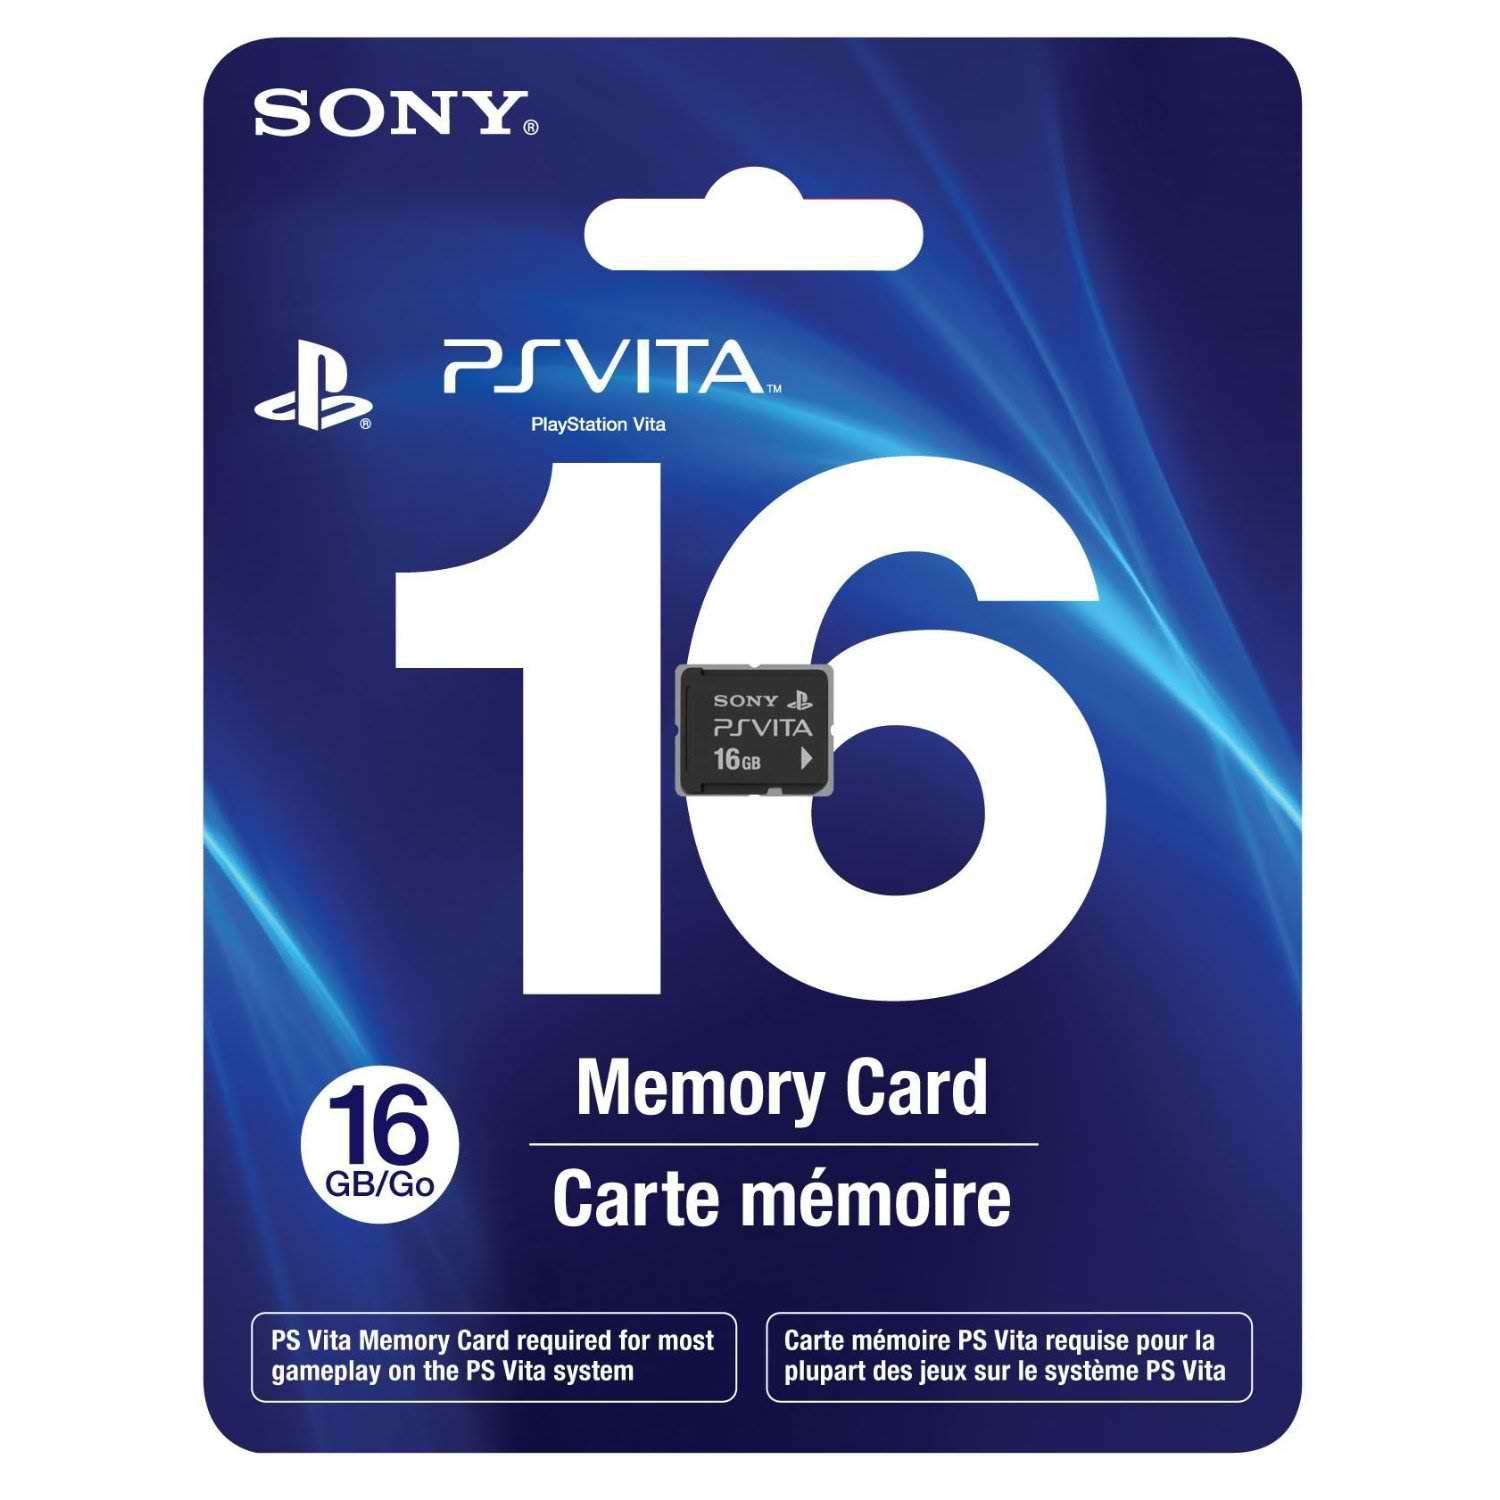 Playstation Vita image 16gb Memory Card HD wallpaper and background